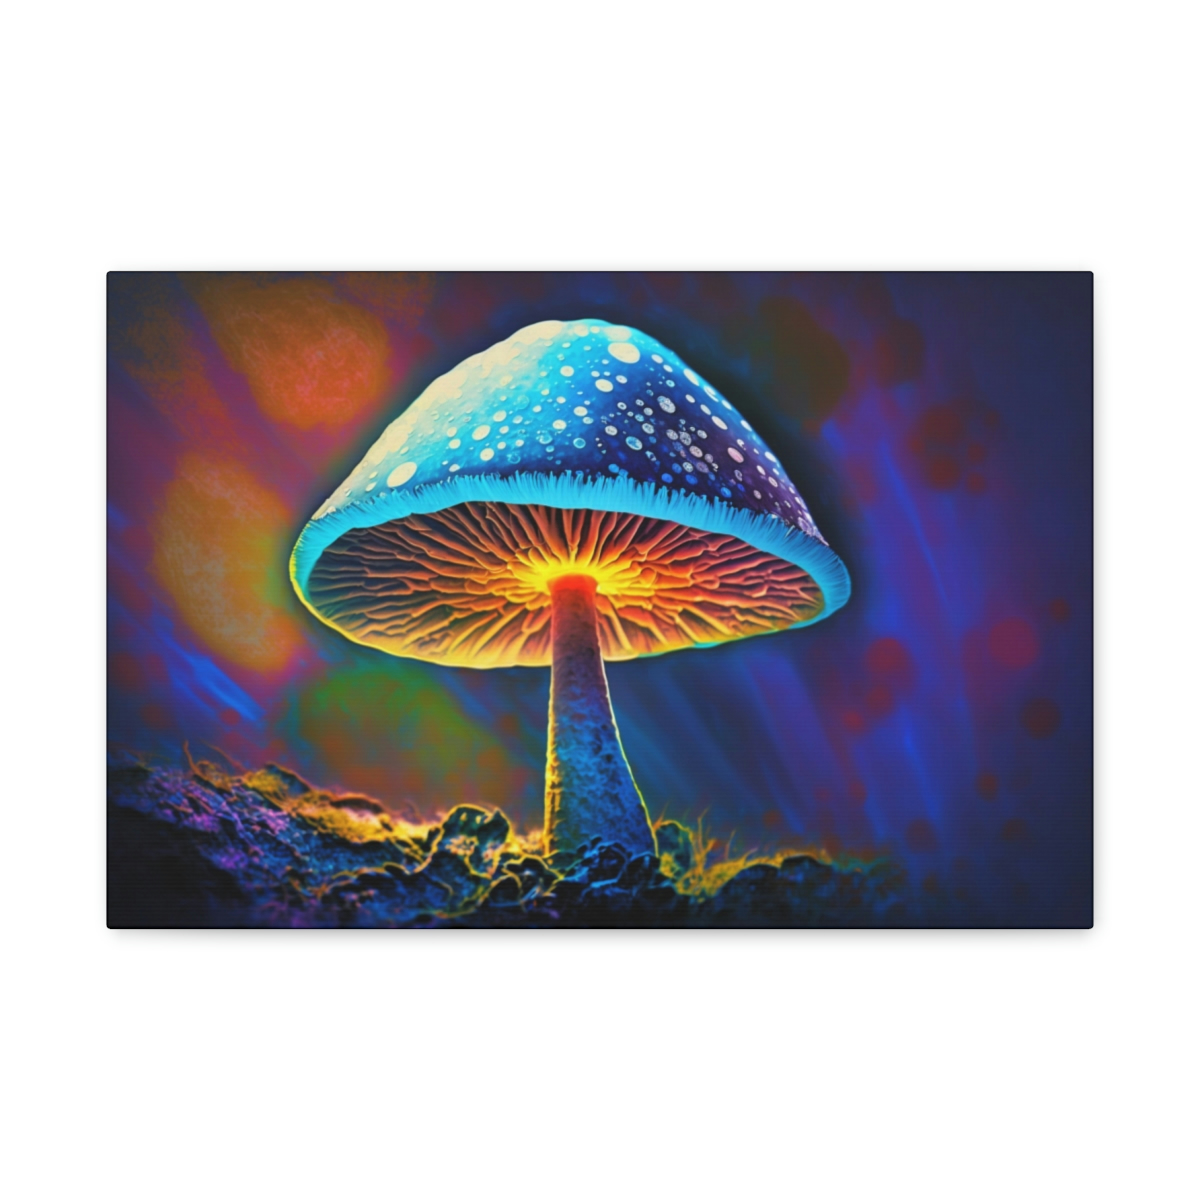 Mushroom Art Canvas Print: Mycological Mindscapes